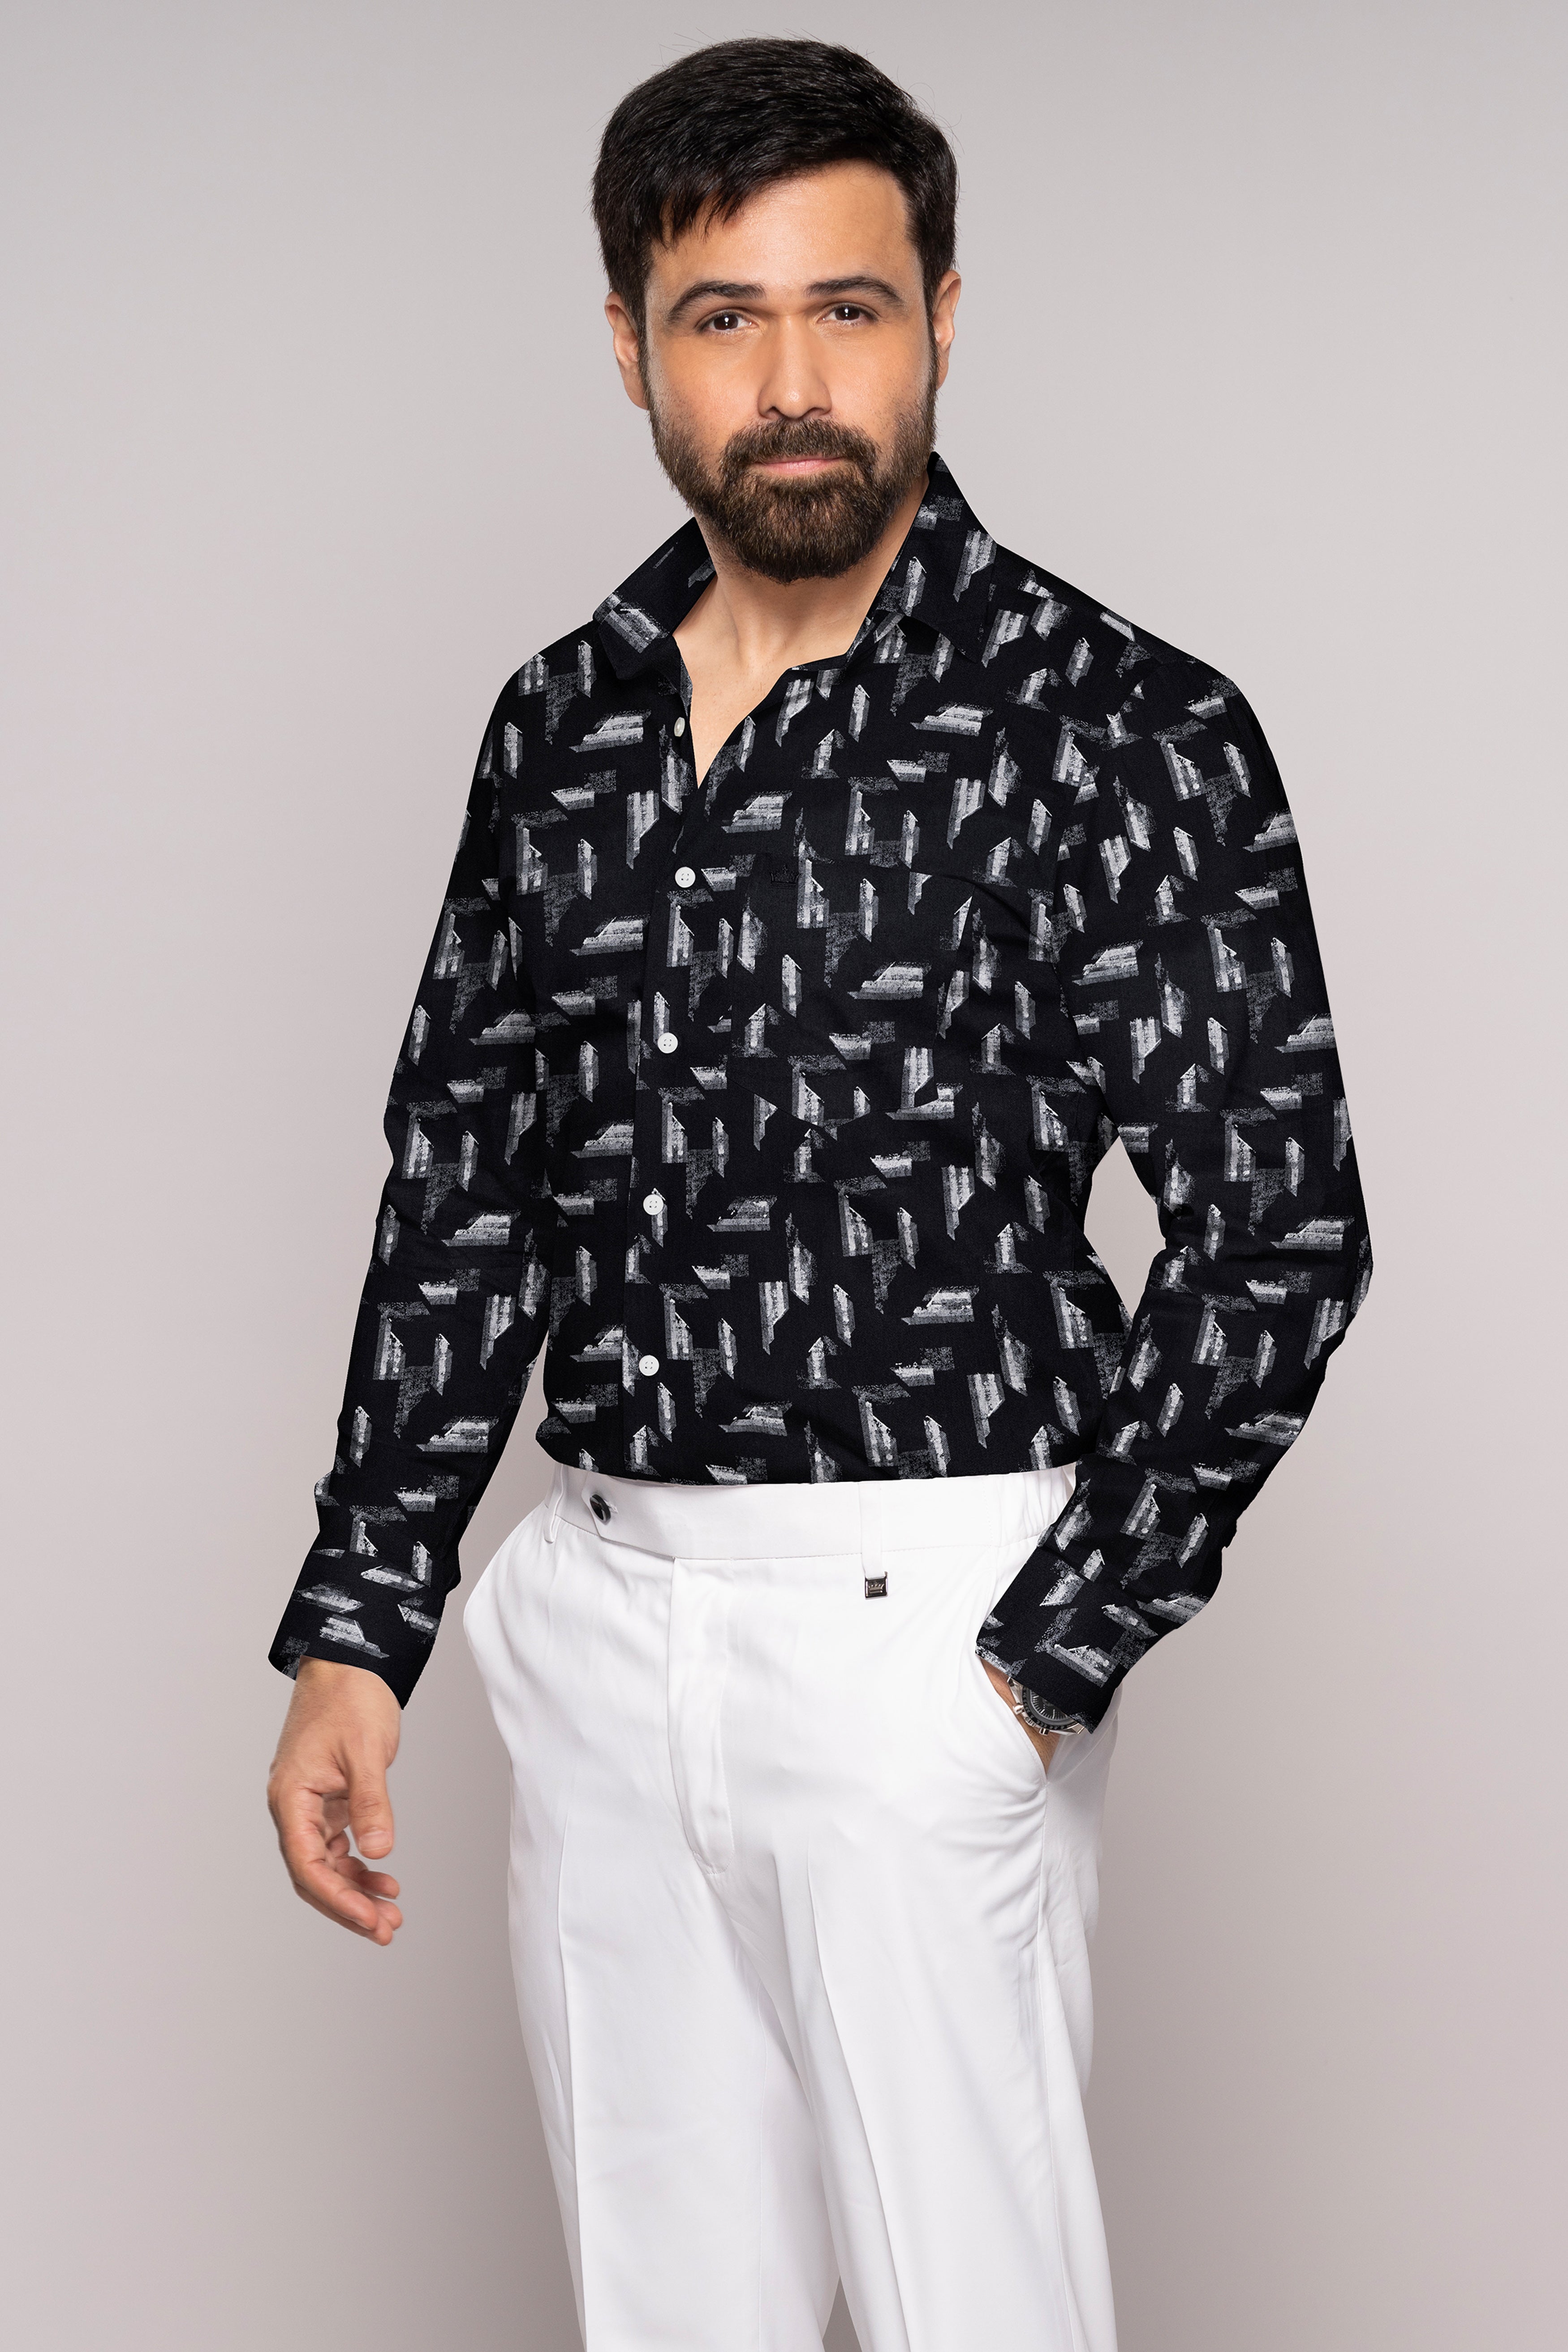 Jade Black and Regent Gray Printed Subtle Sheen Super Soft Premium Cotton Shirt